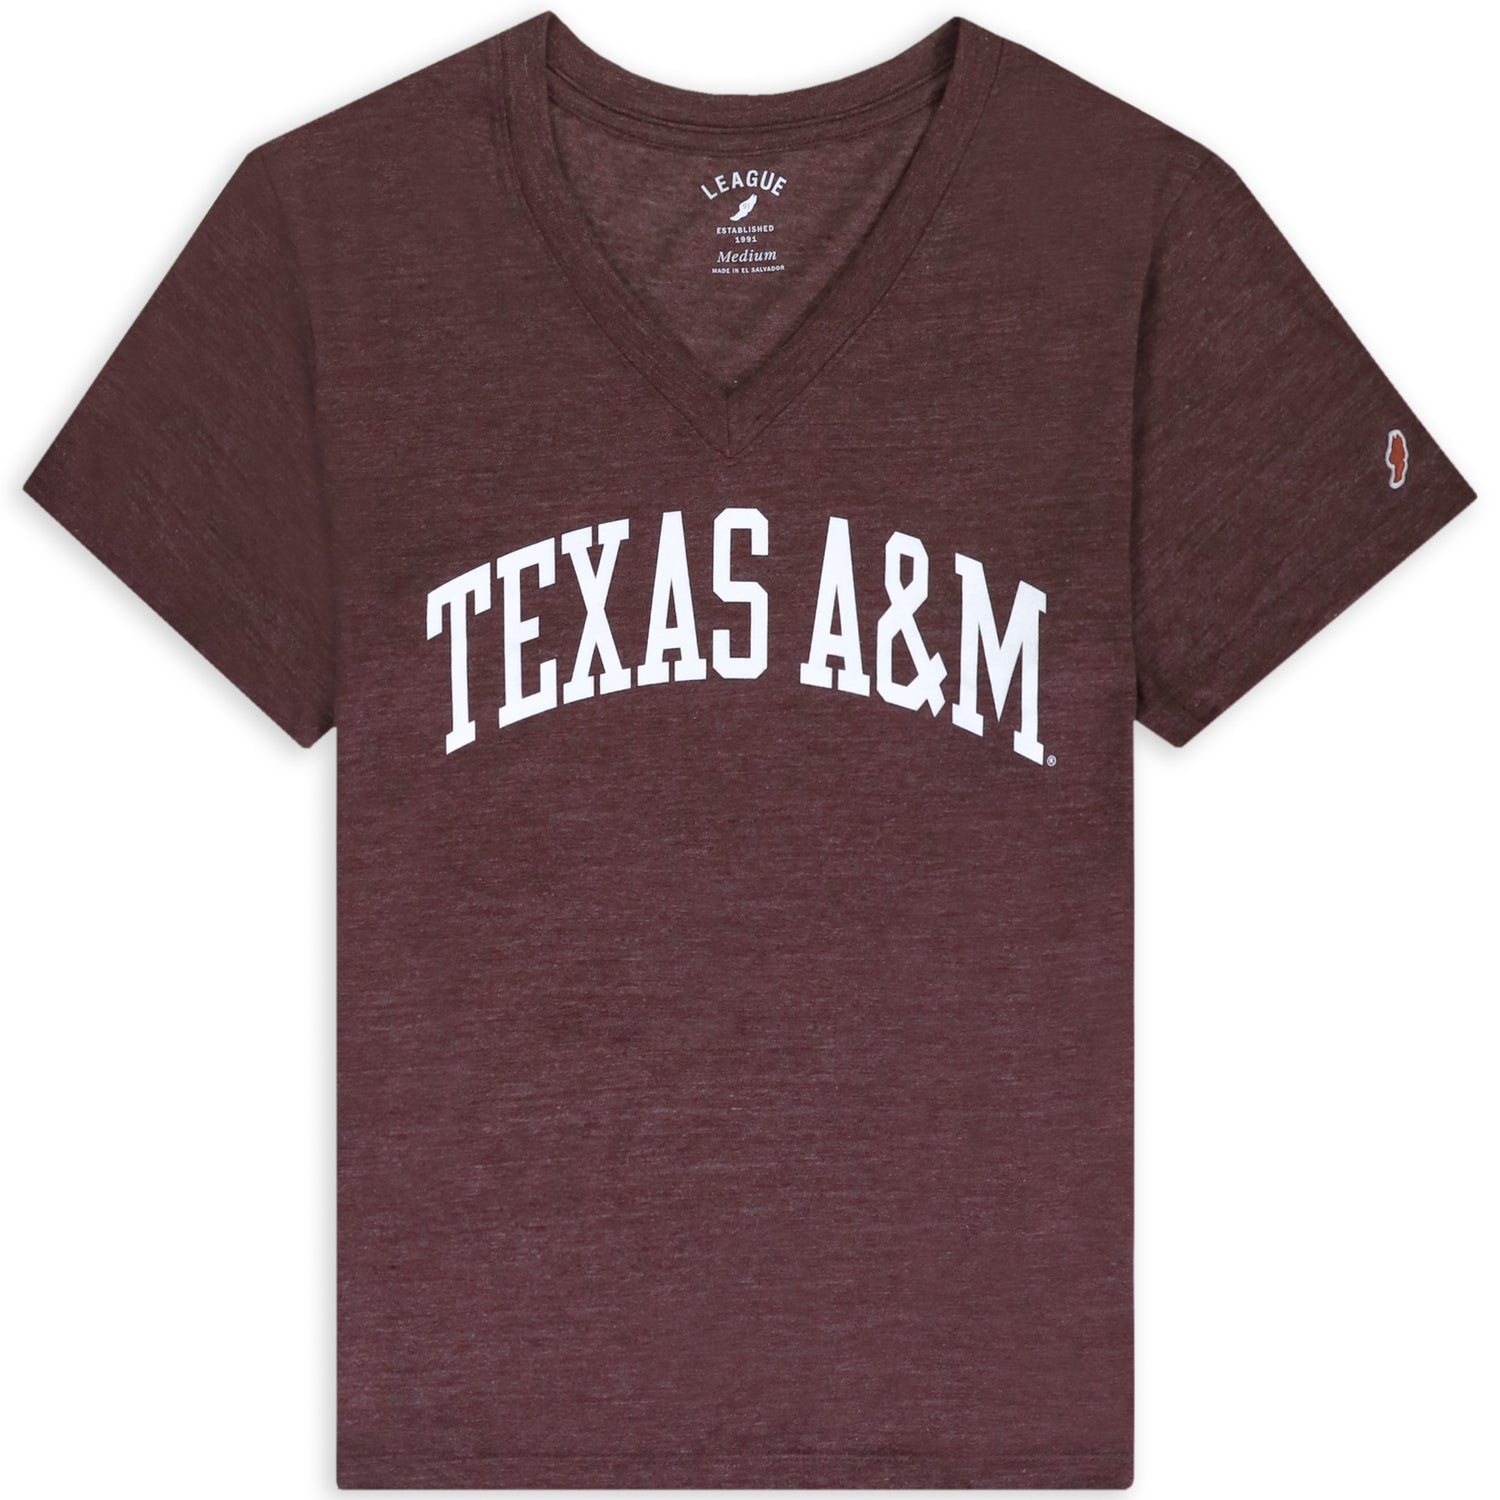 Texas A&M League Women's Intramural Arched Boyfriend T-Shirt